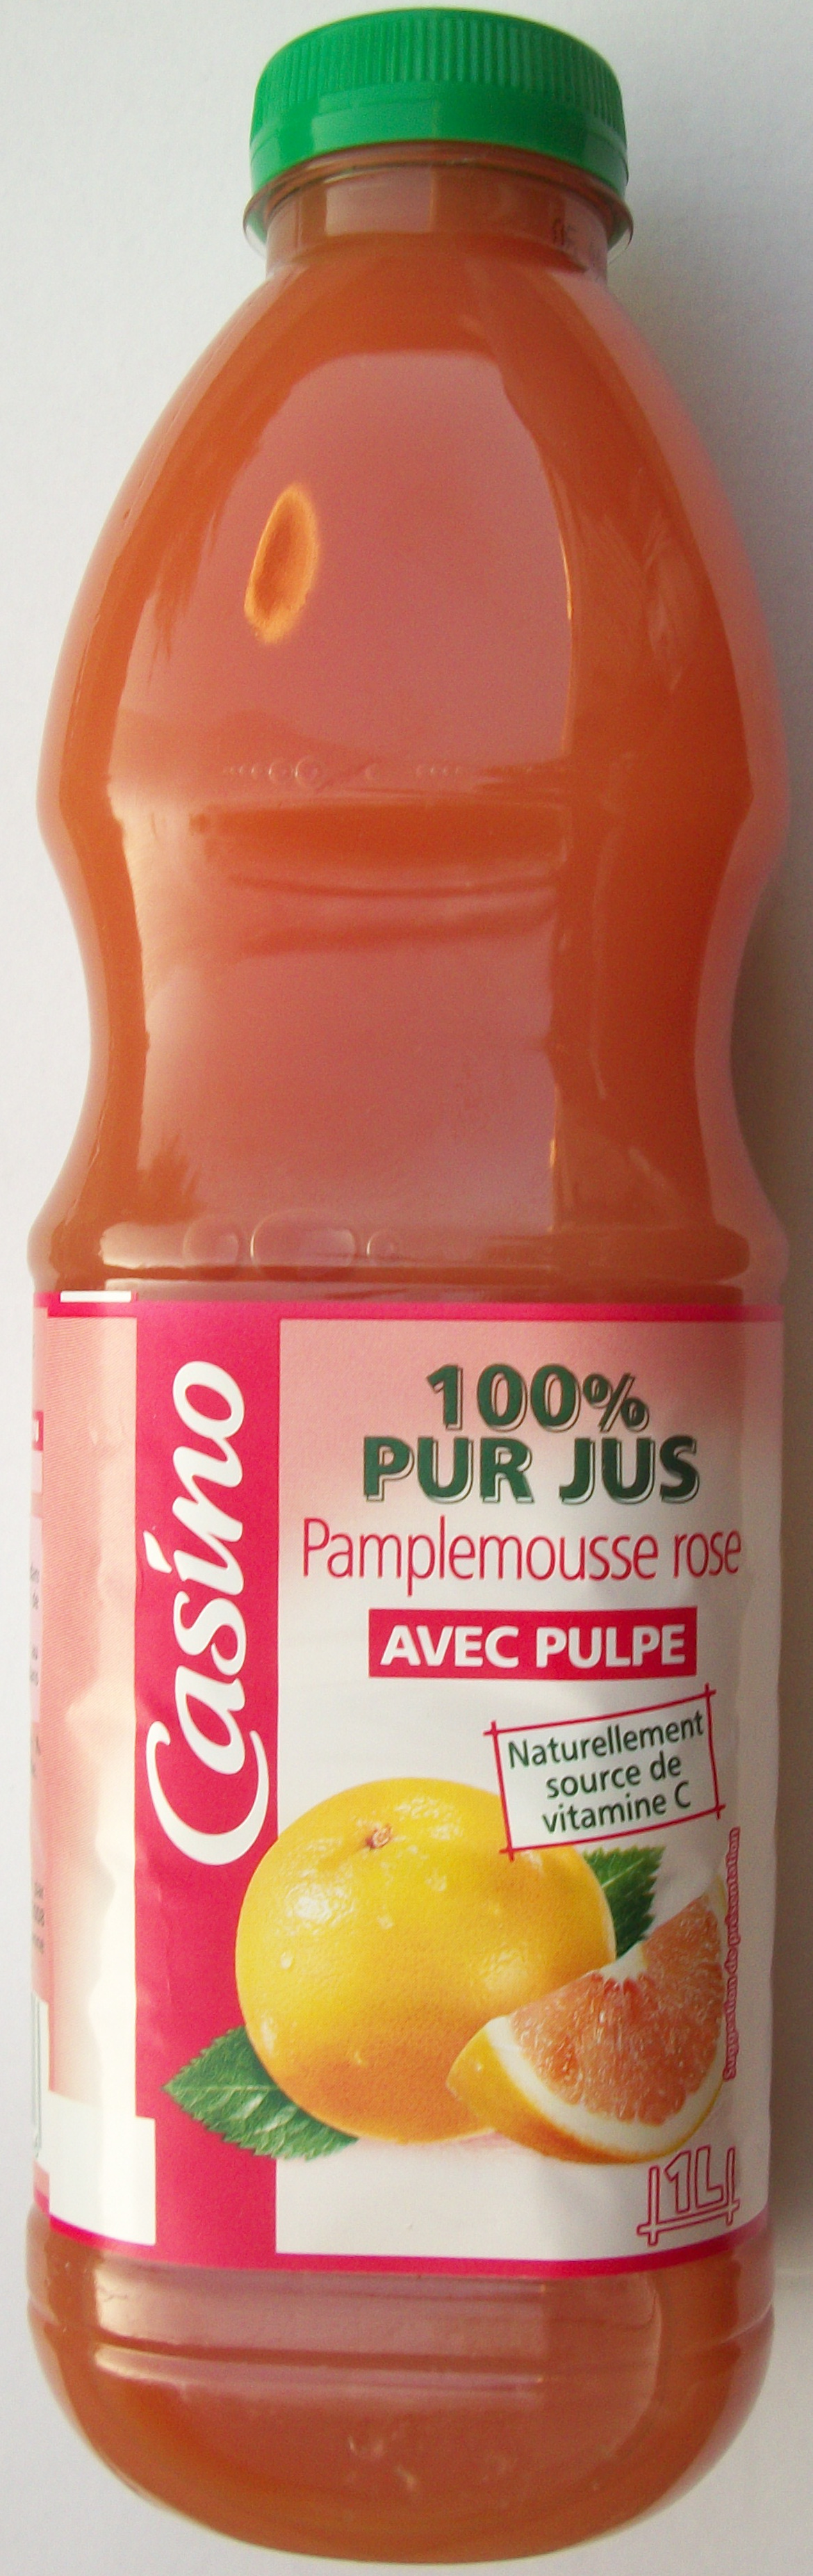 100% Pur Jus Pamplemousse rose avec pulpe - Product - fr